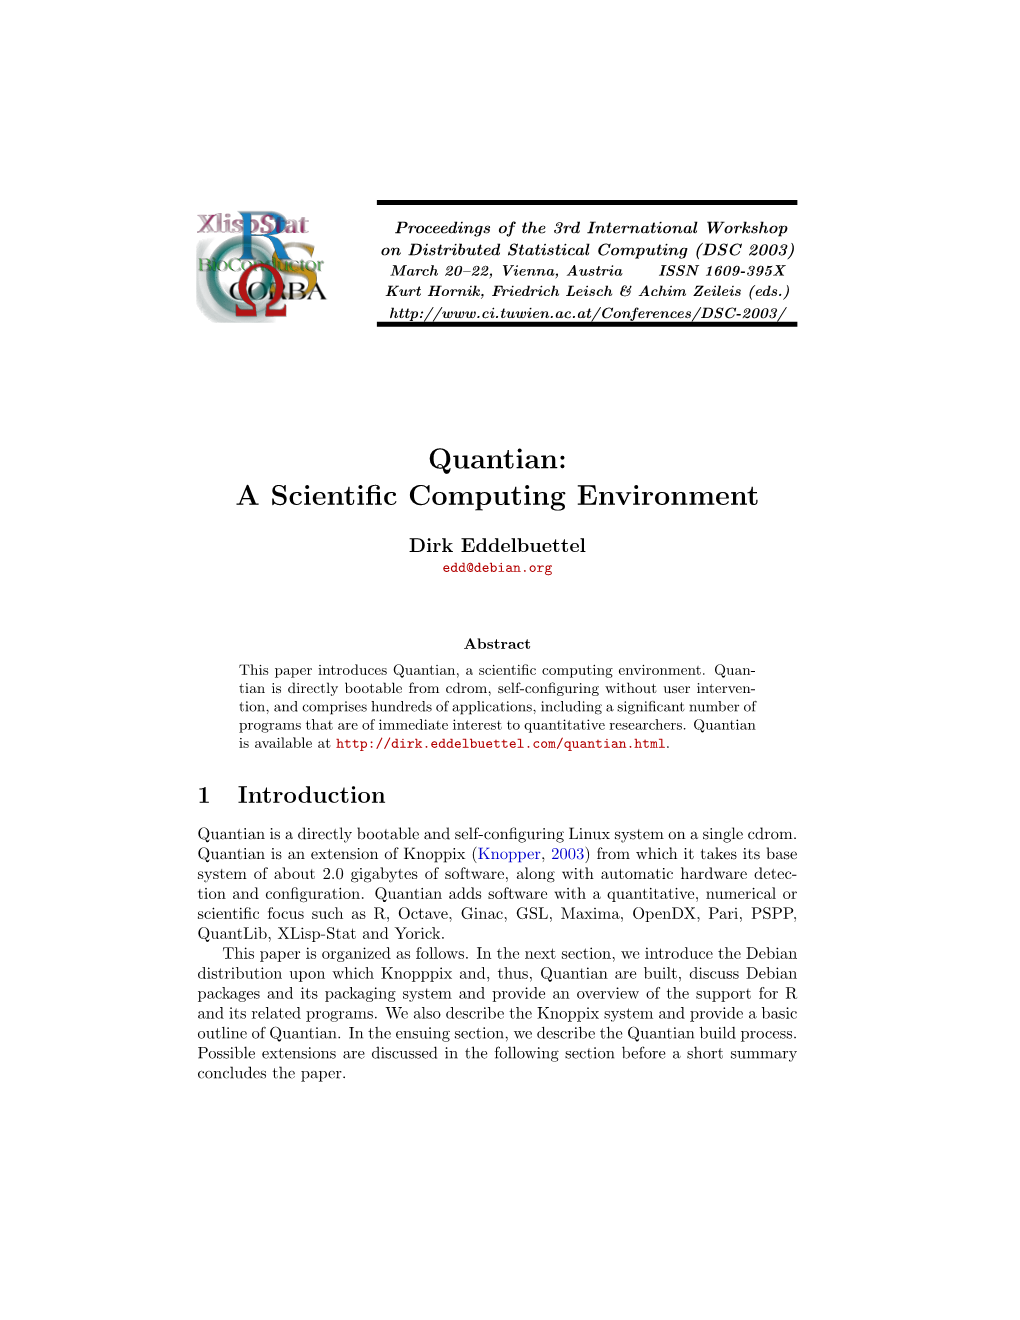 Quantian: a Scientific Computing Environment